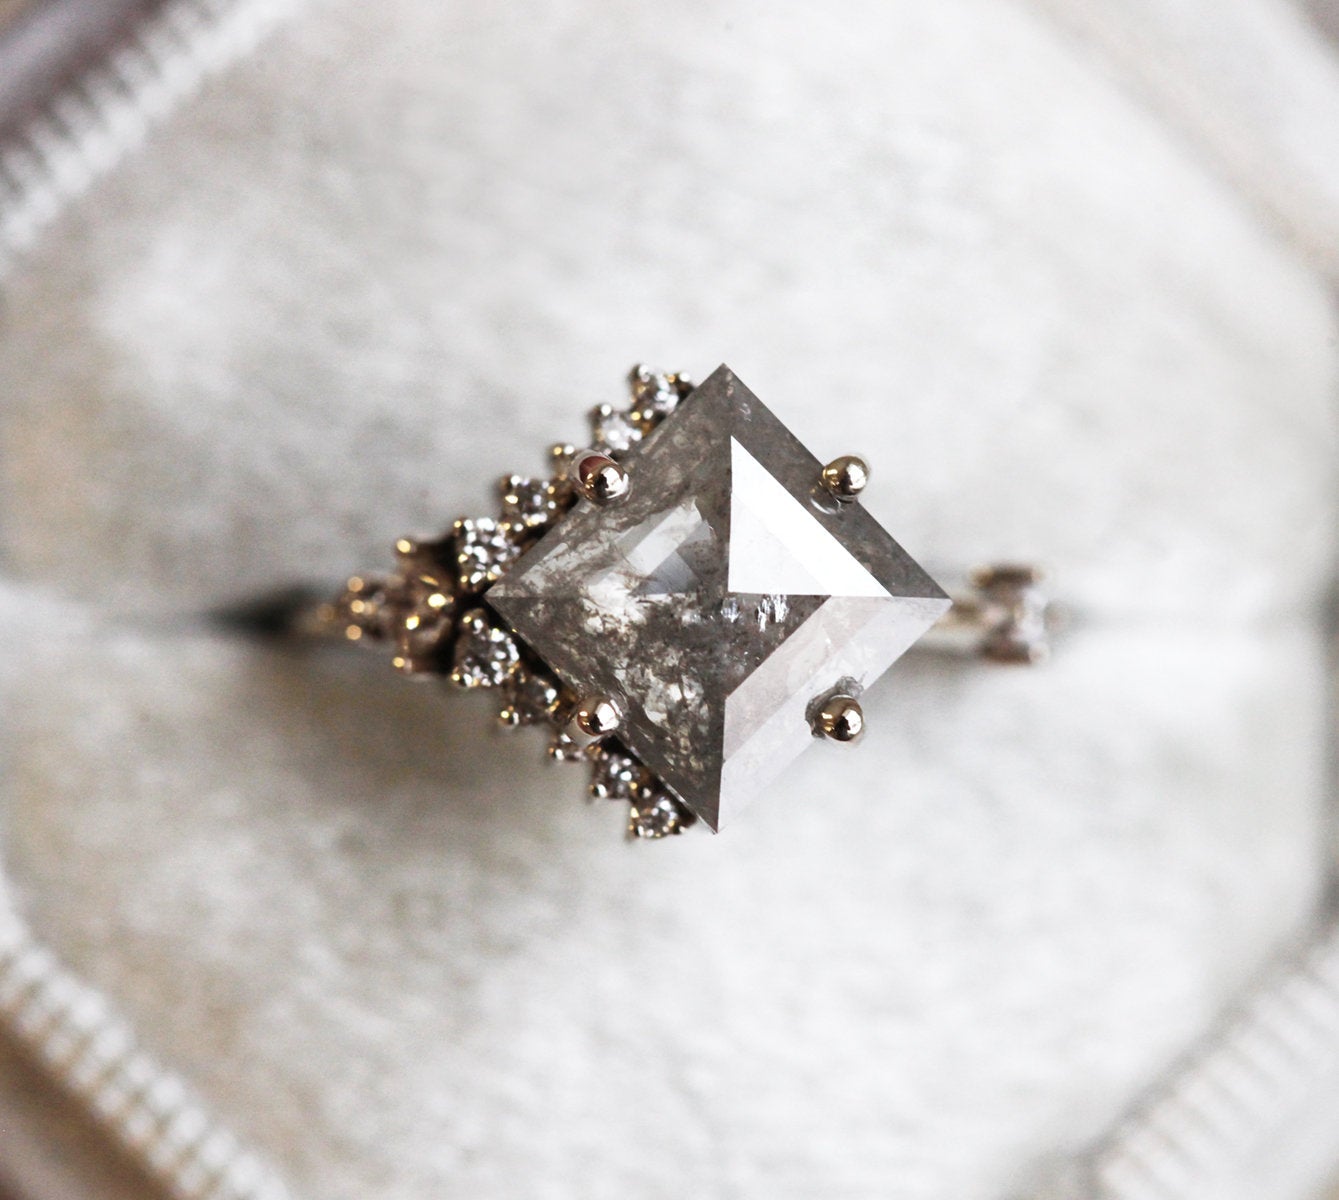 Square Salt & Pepper Diamond Ring with Side White Diamonds